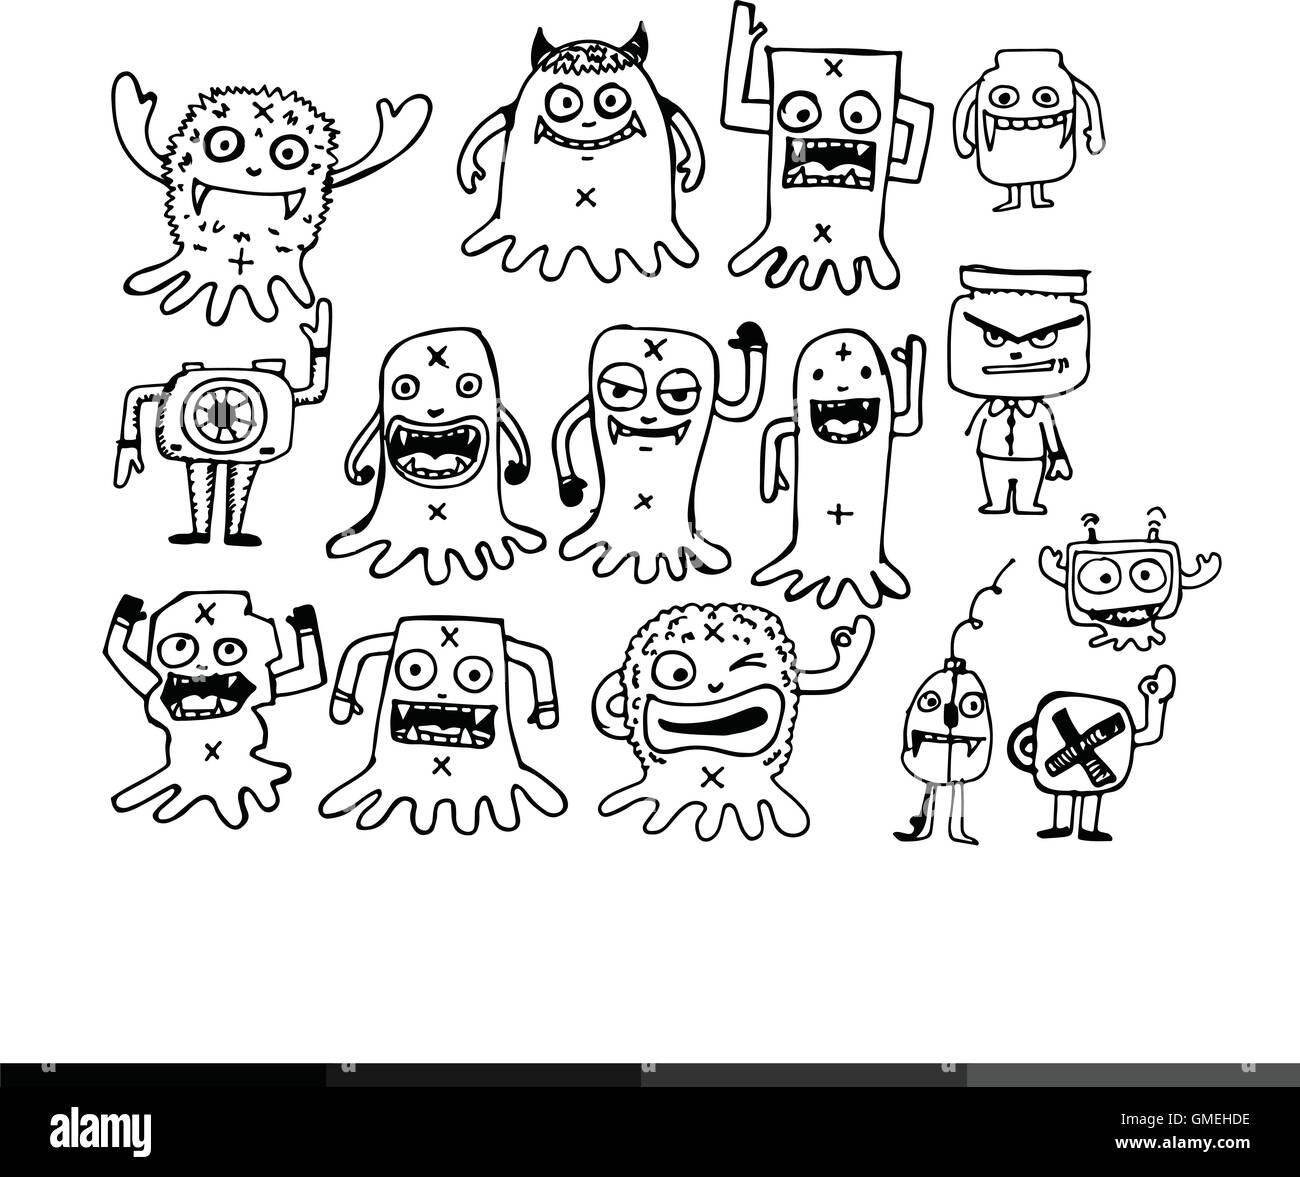 cartoon cute monsters illustration design Stock Vector